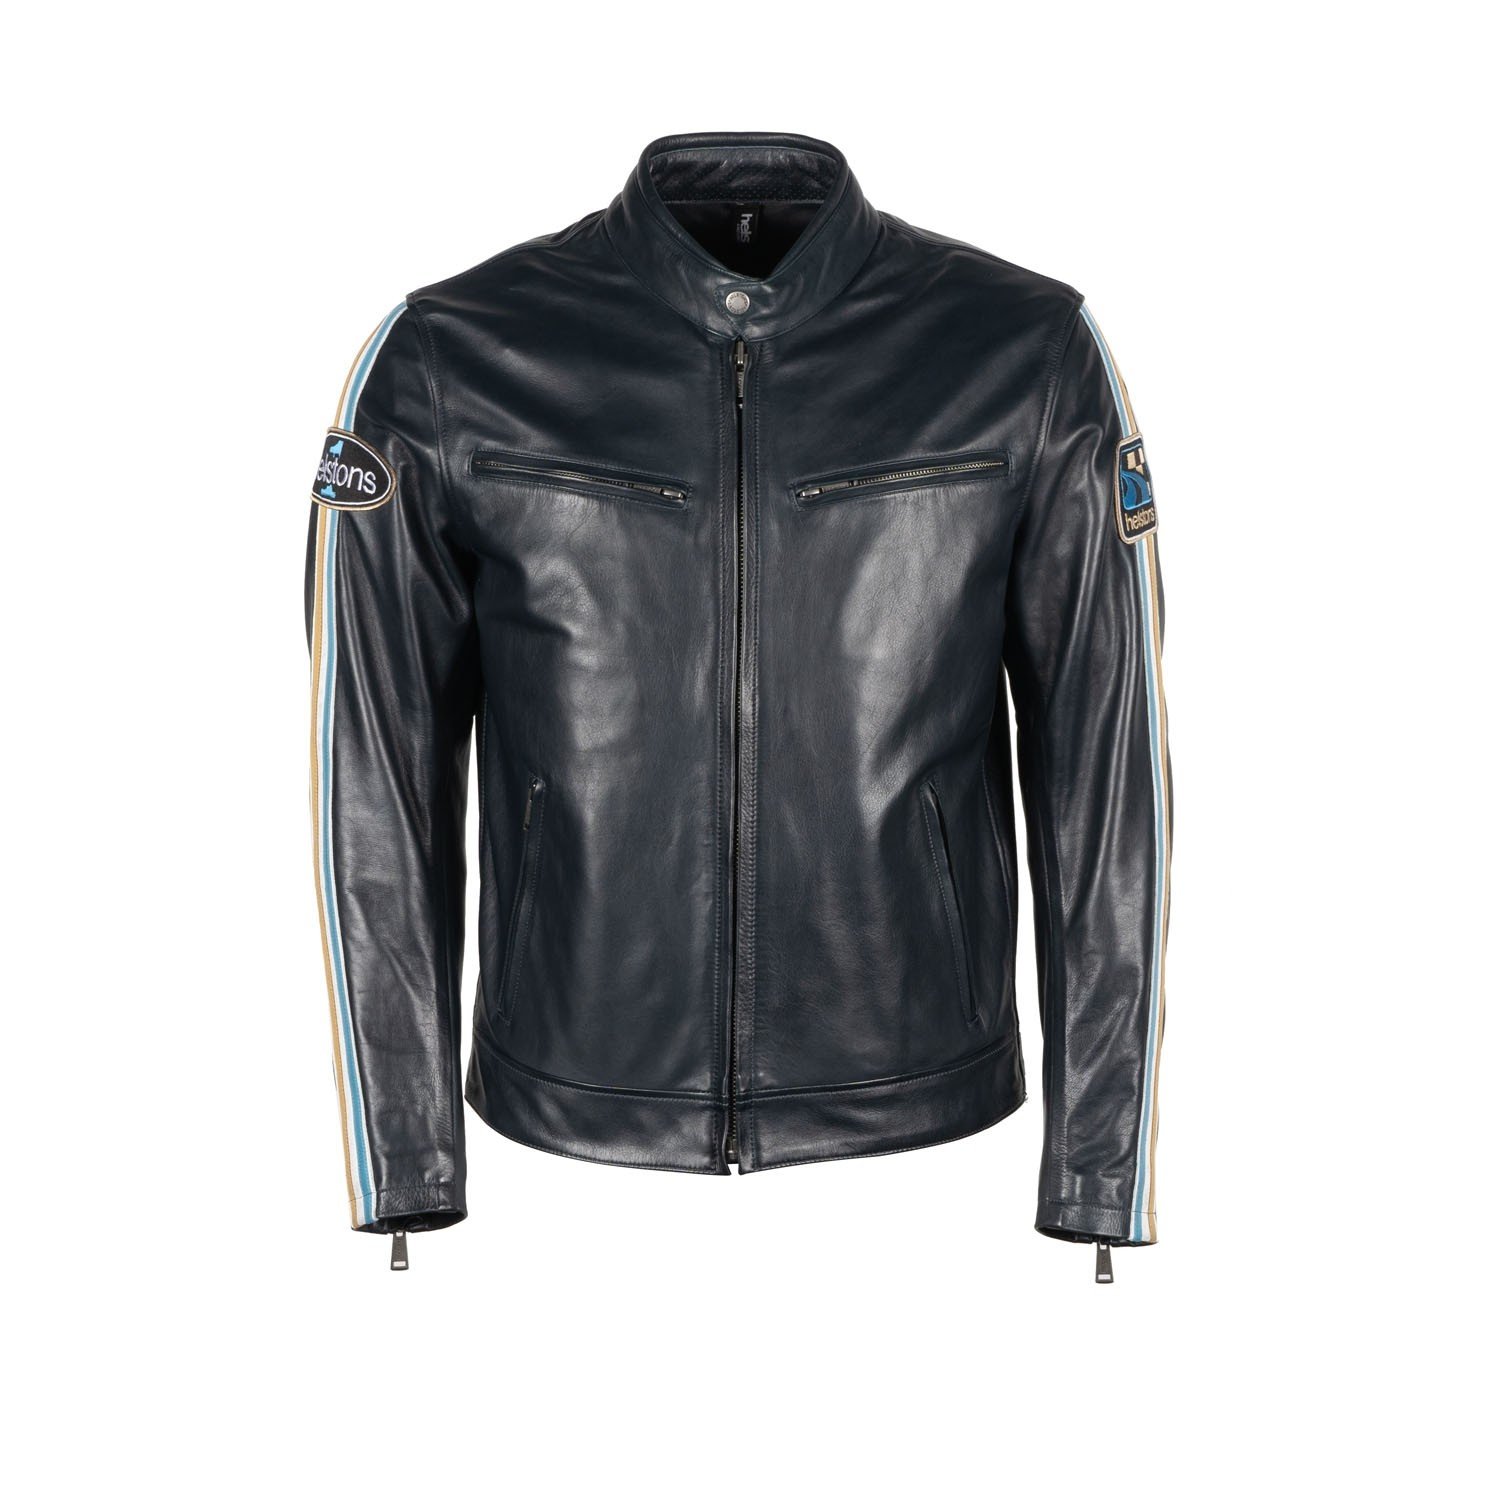 Image of Helstons Race Leather Aniline Jacket Blue Size S ID 3662136083189